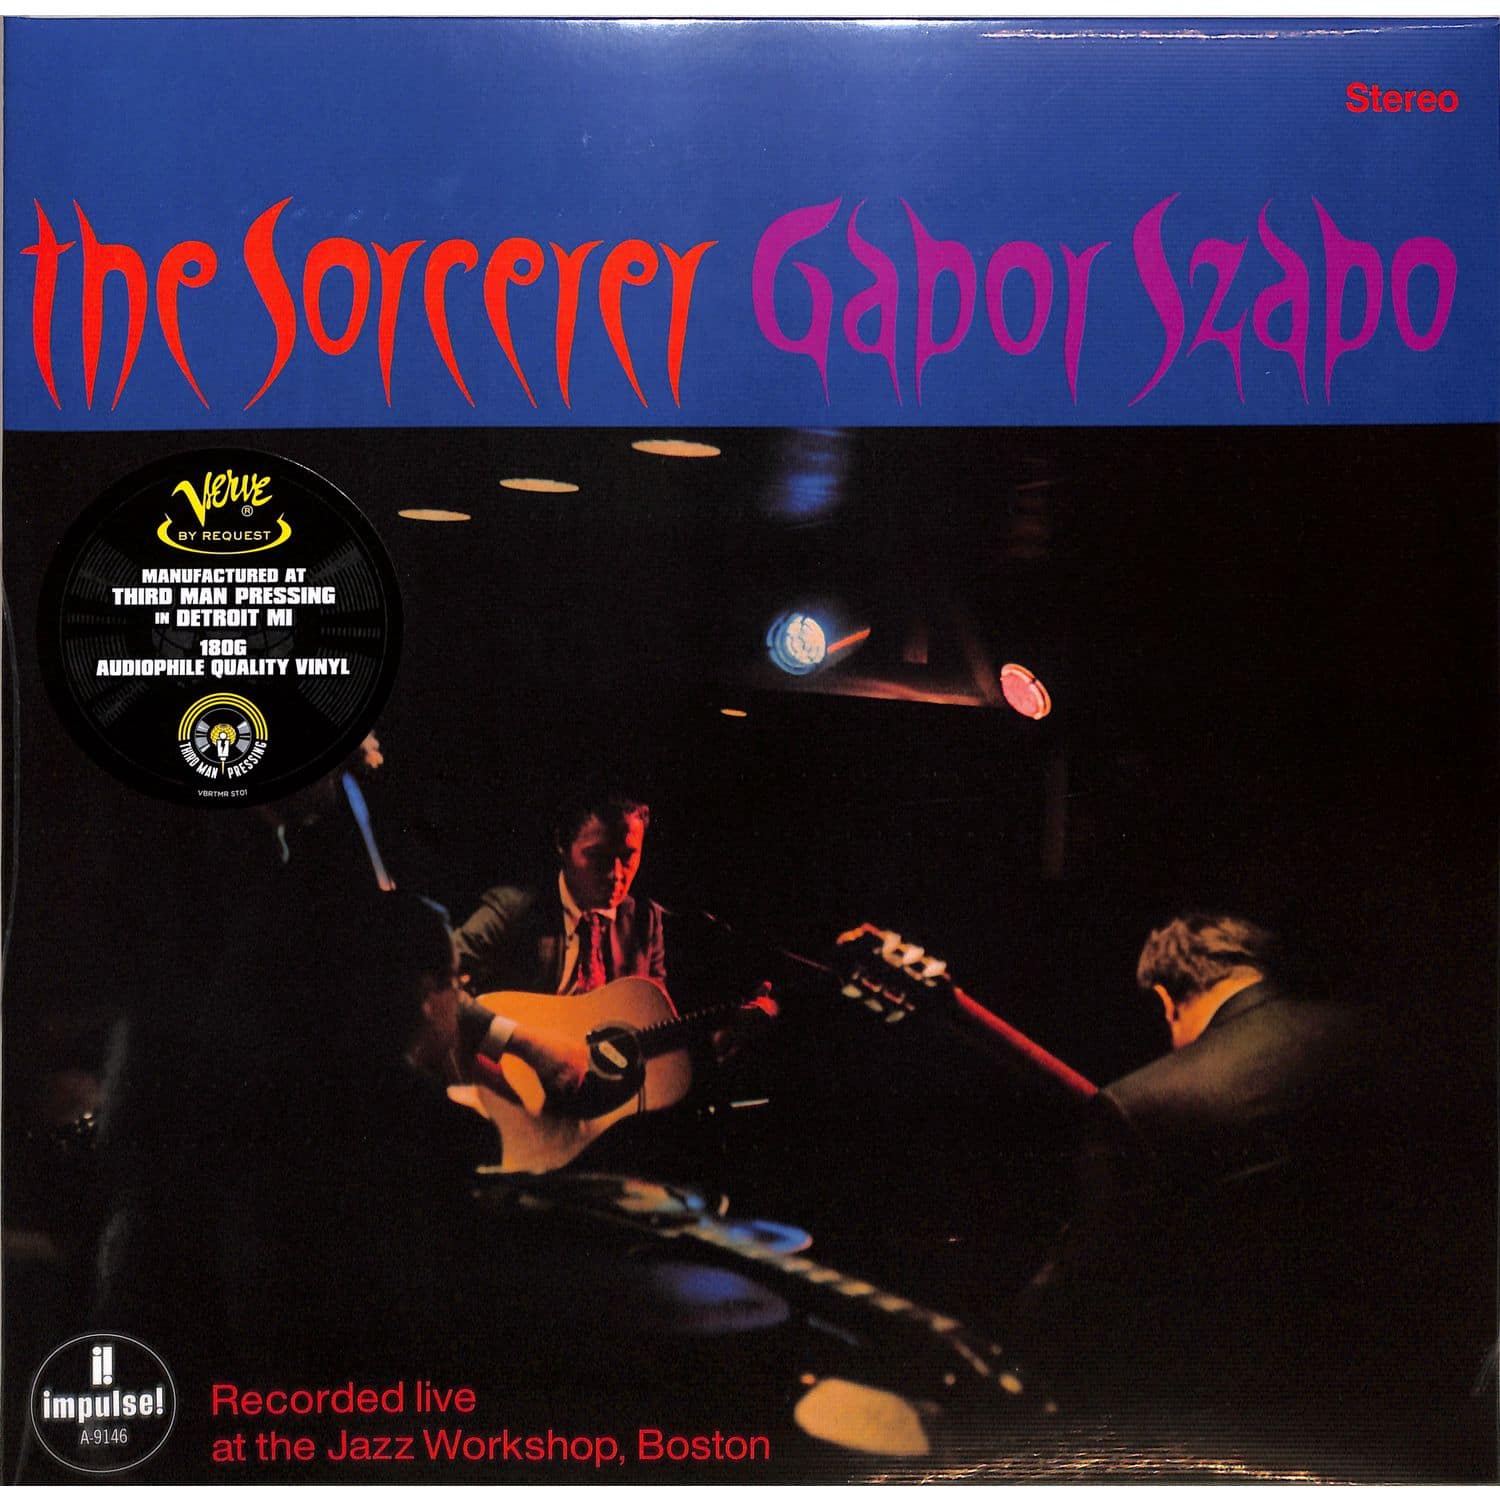 Gabor Szabo - THE SORCERER 